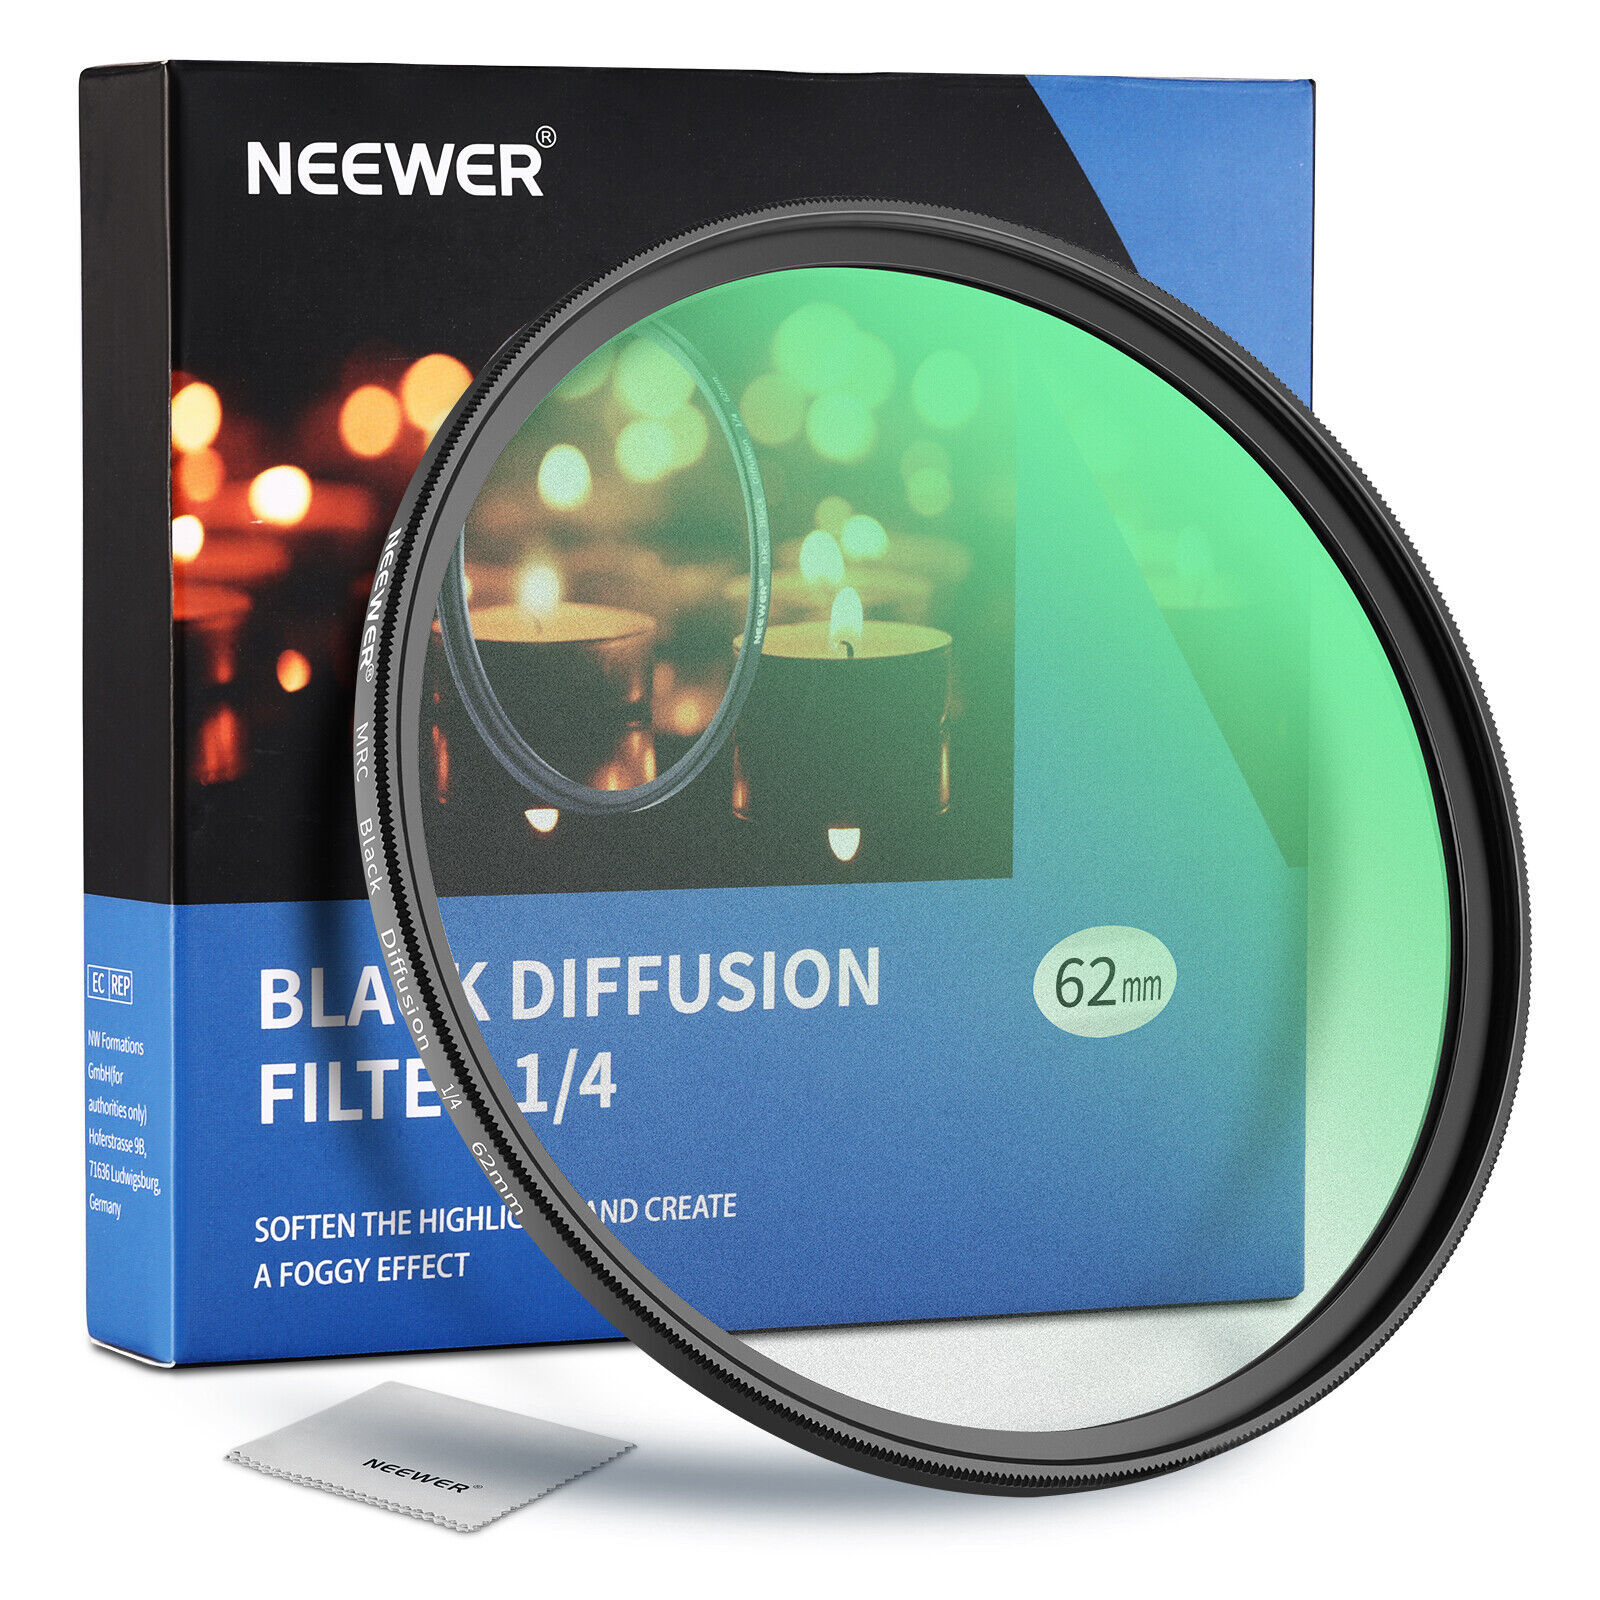 NEEWER 62mm Pro-Mist 1/4 Filter Dream Cinematic Effect Ultra-Slim Camera Filter - $73.99